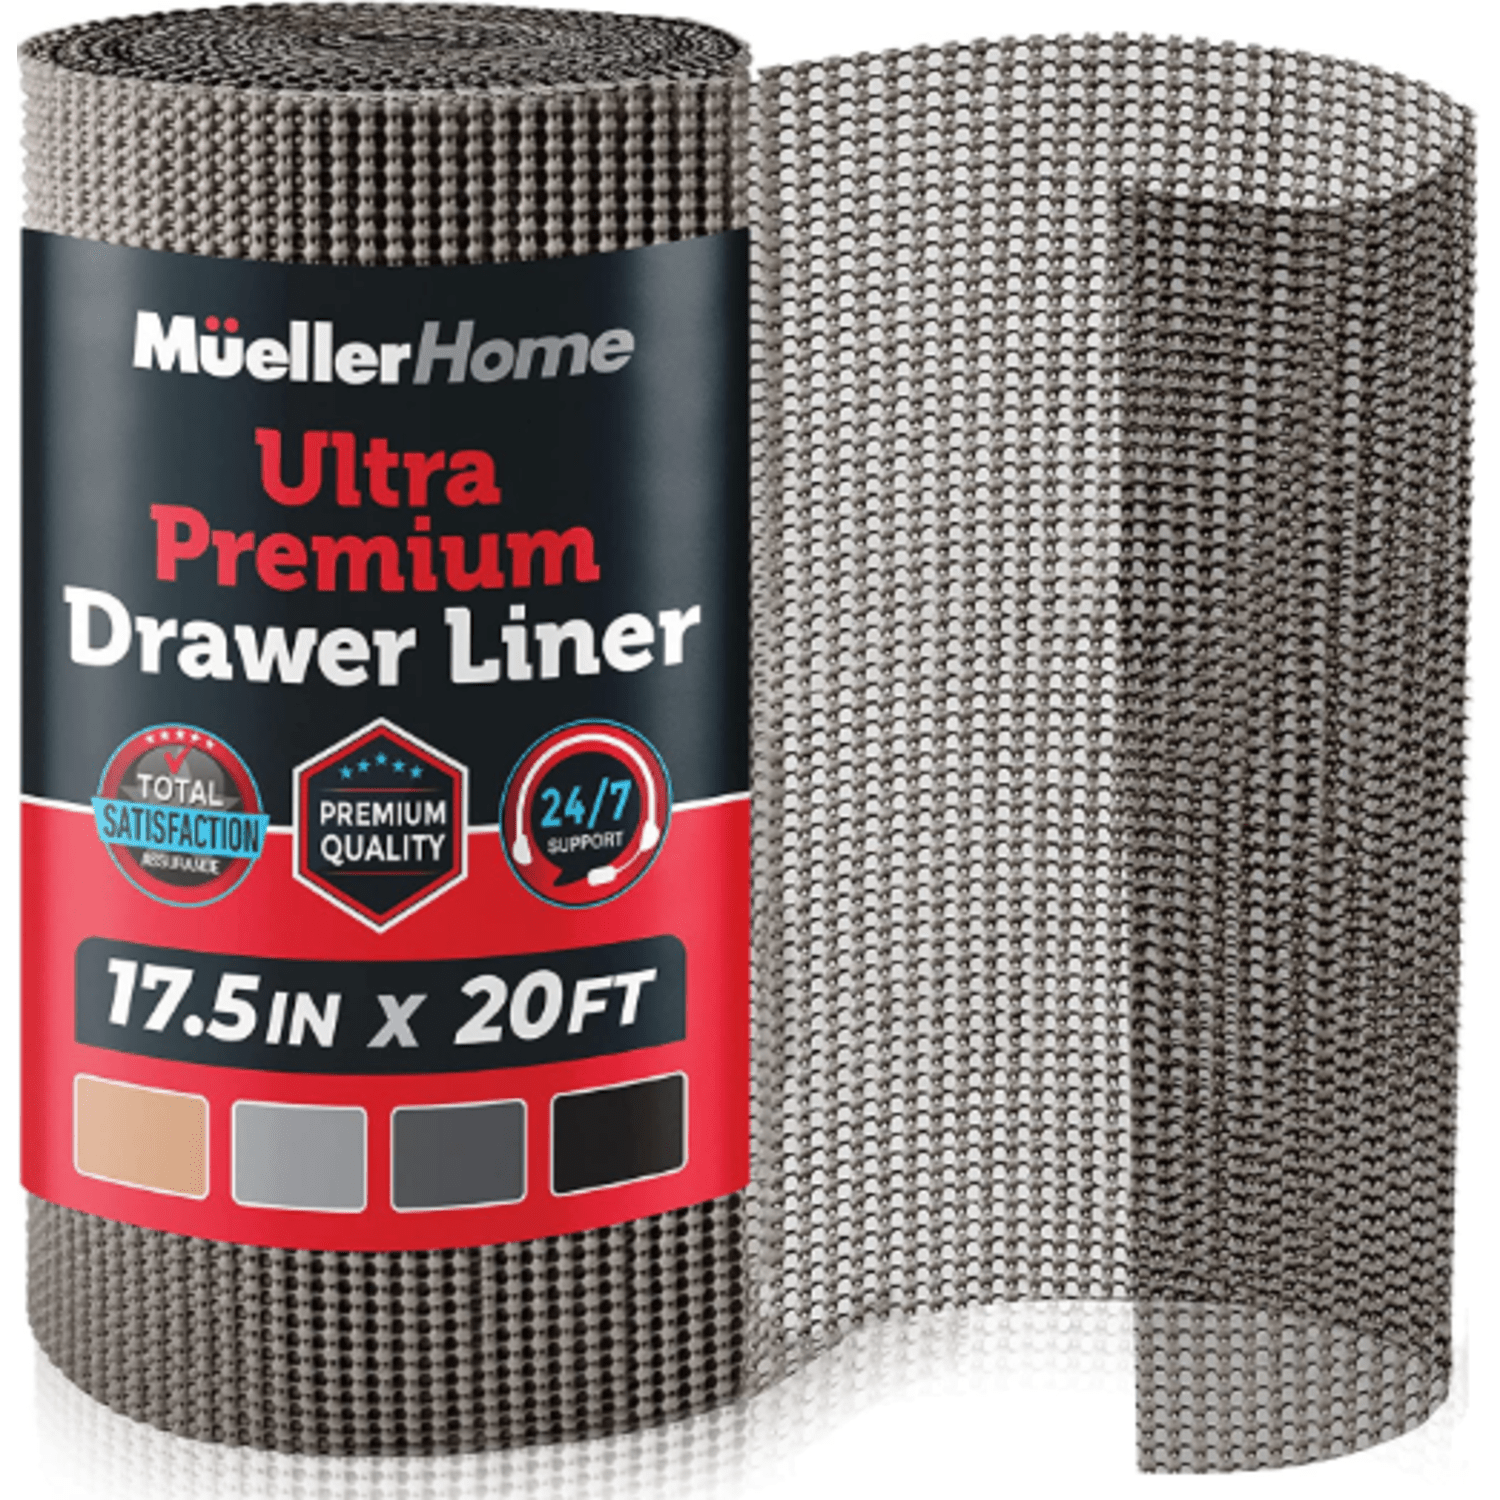 muellerhome_Ultra-Premium-Drawer-Liner-17.5in-x-20ft-Gray